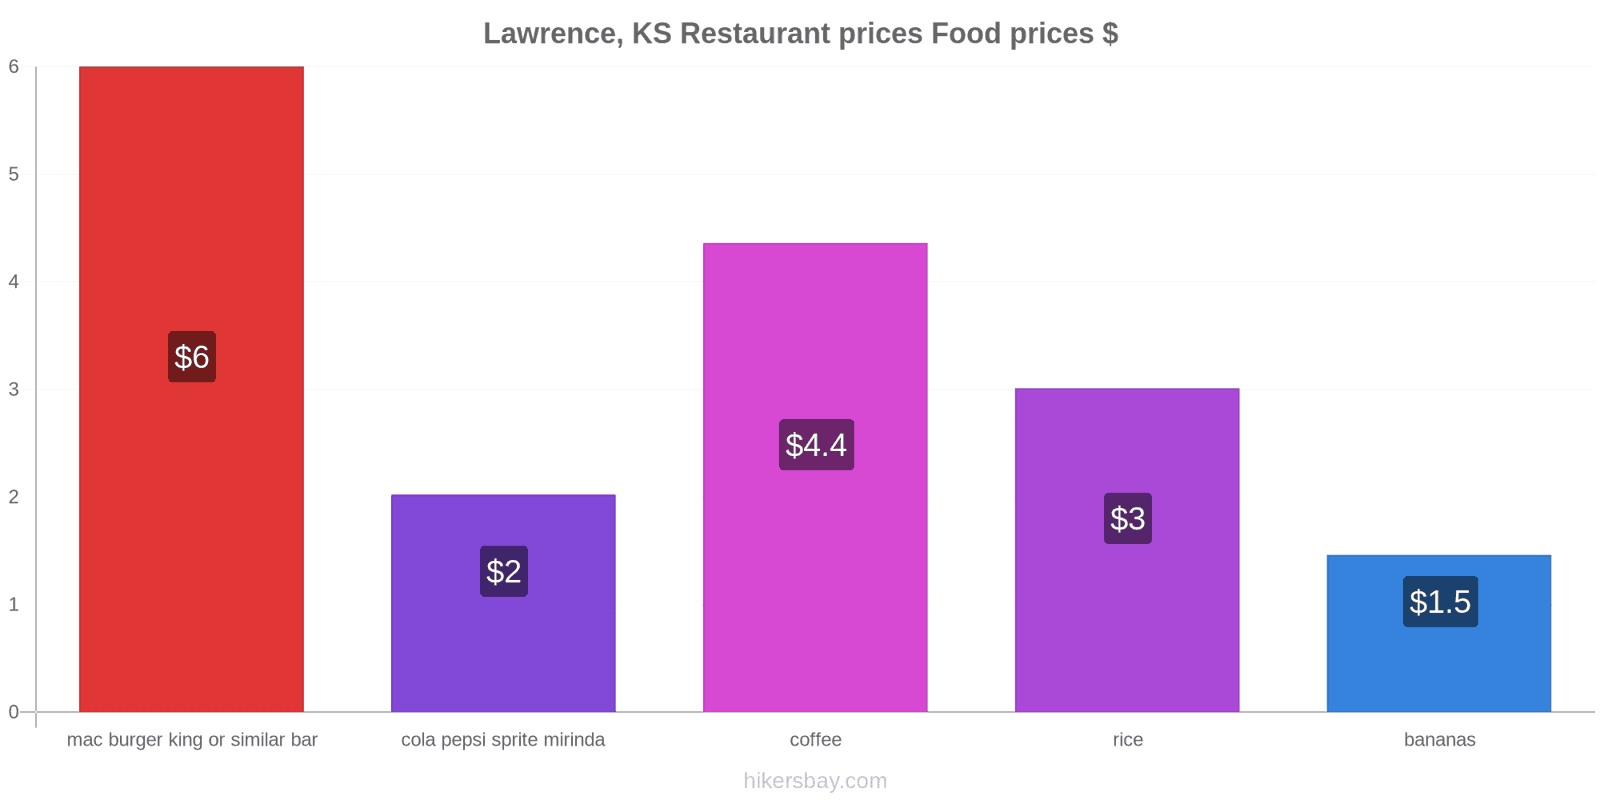 Lawrence, KS price changes hikersbay.com